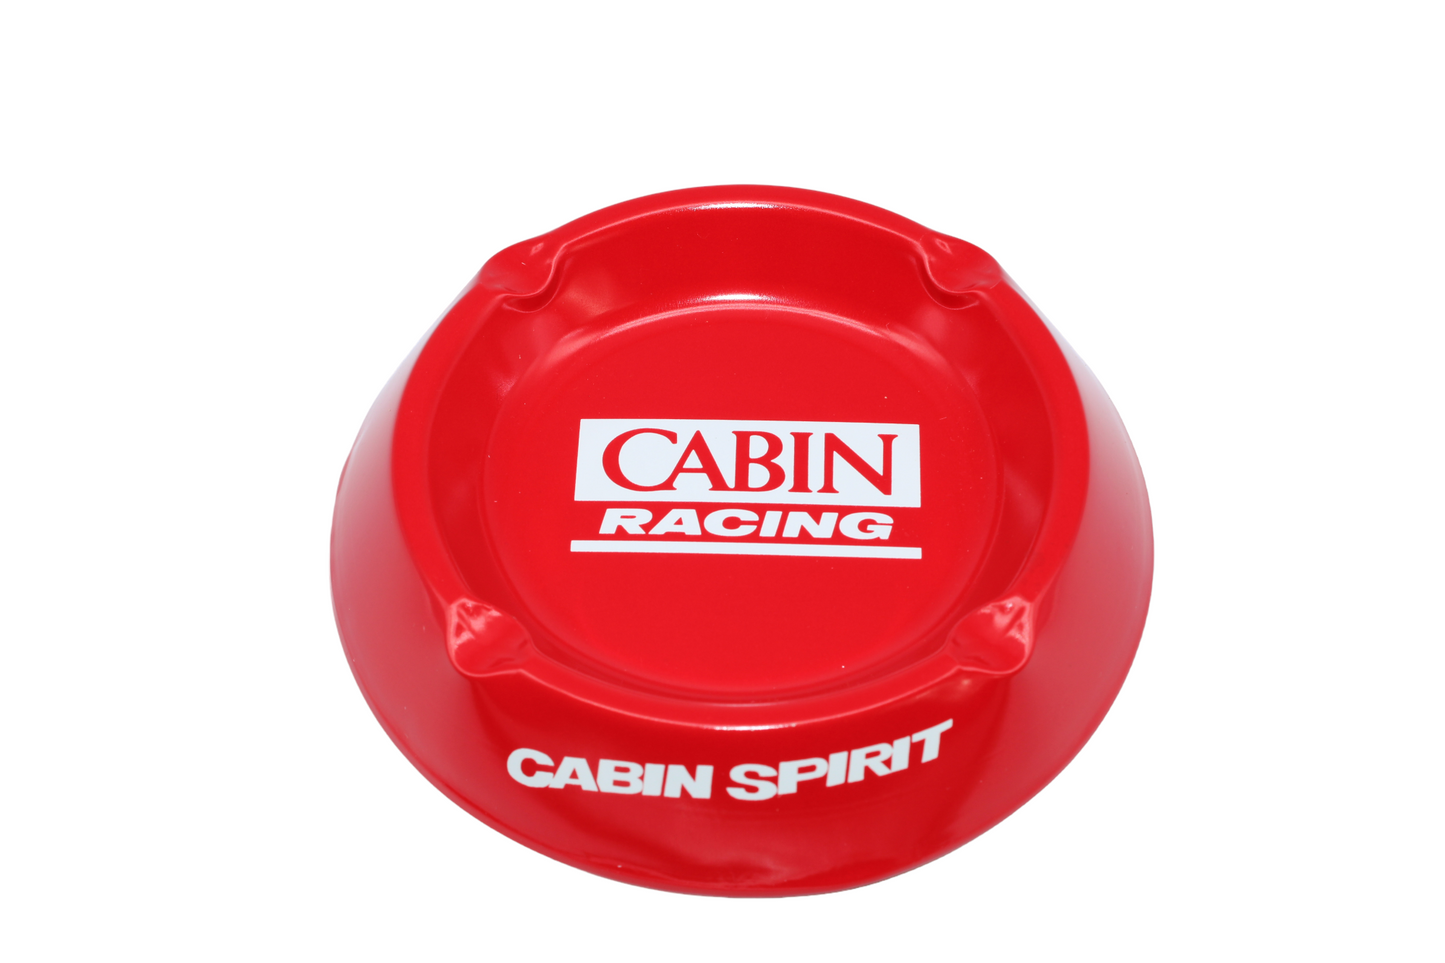 Cabin racing ash tray/ key dish